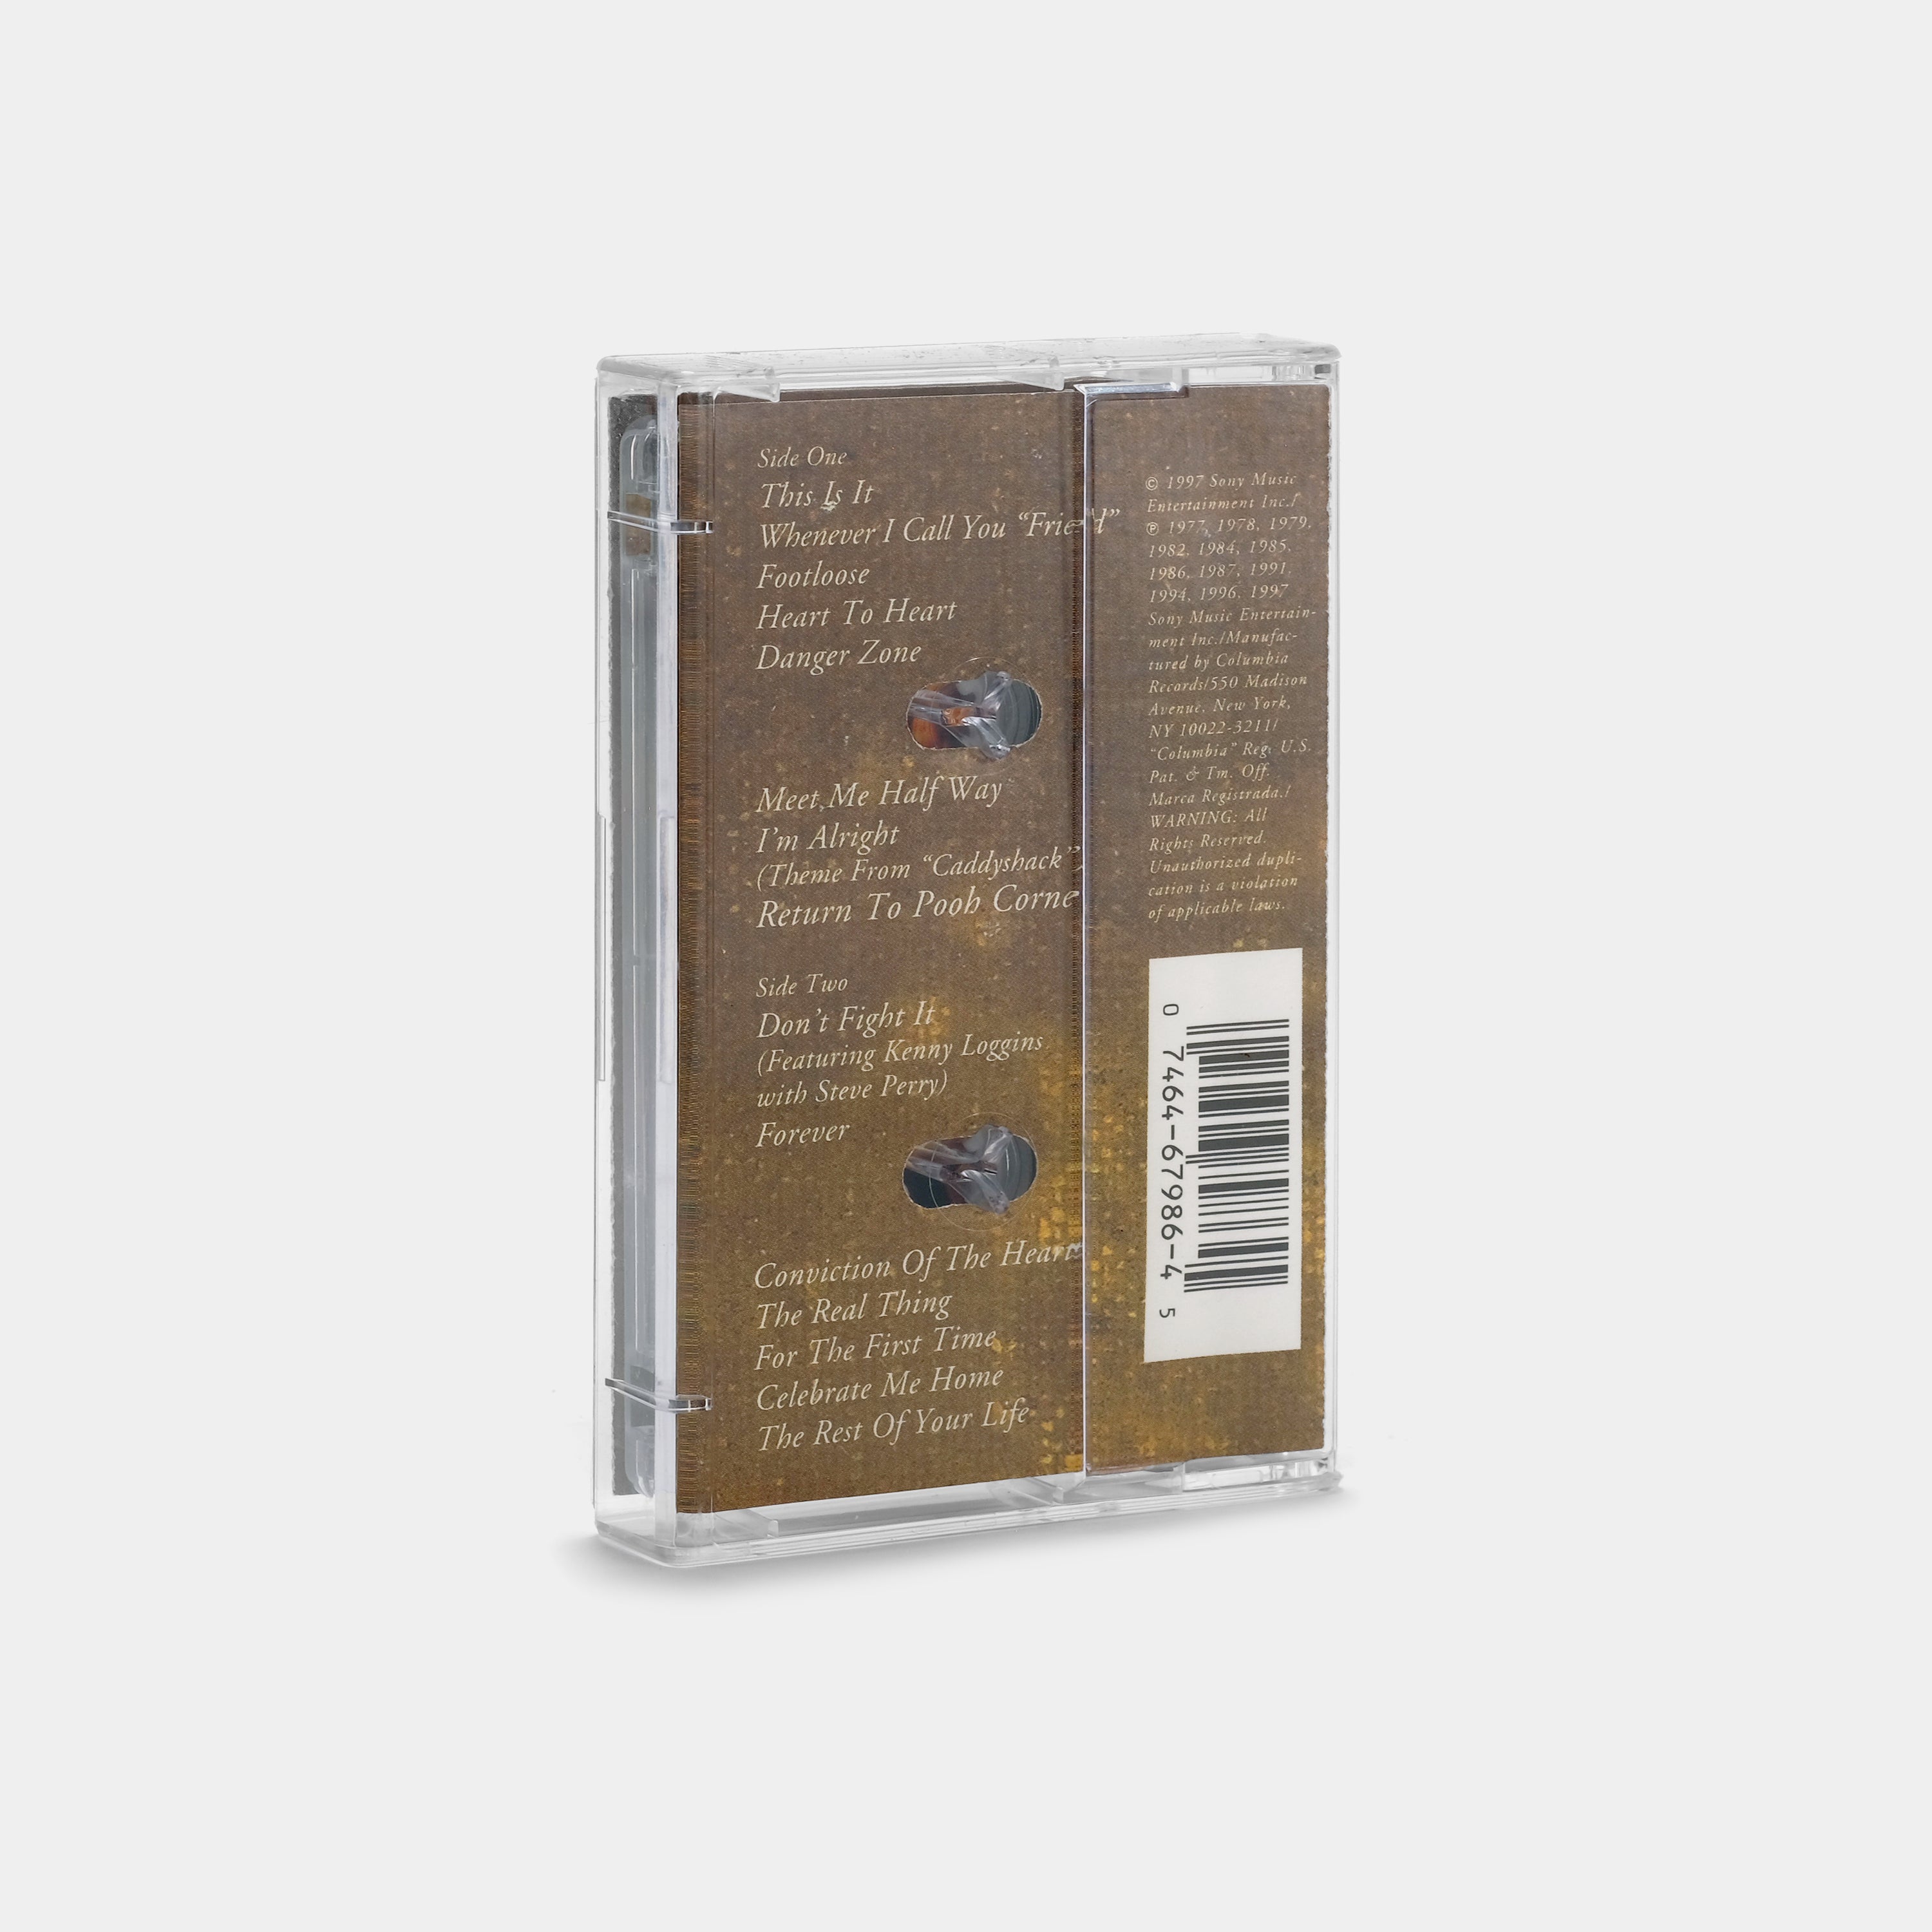 Kenny Loggins - The Greatest Hits of Kenny Loggins Cassette Tape